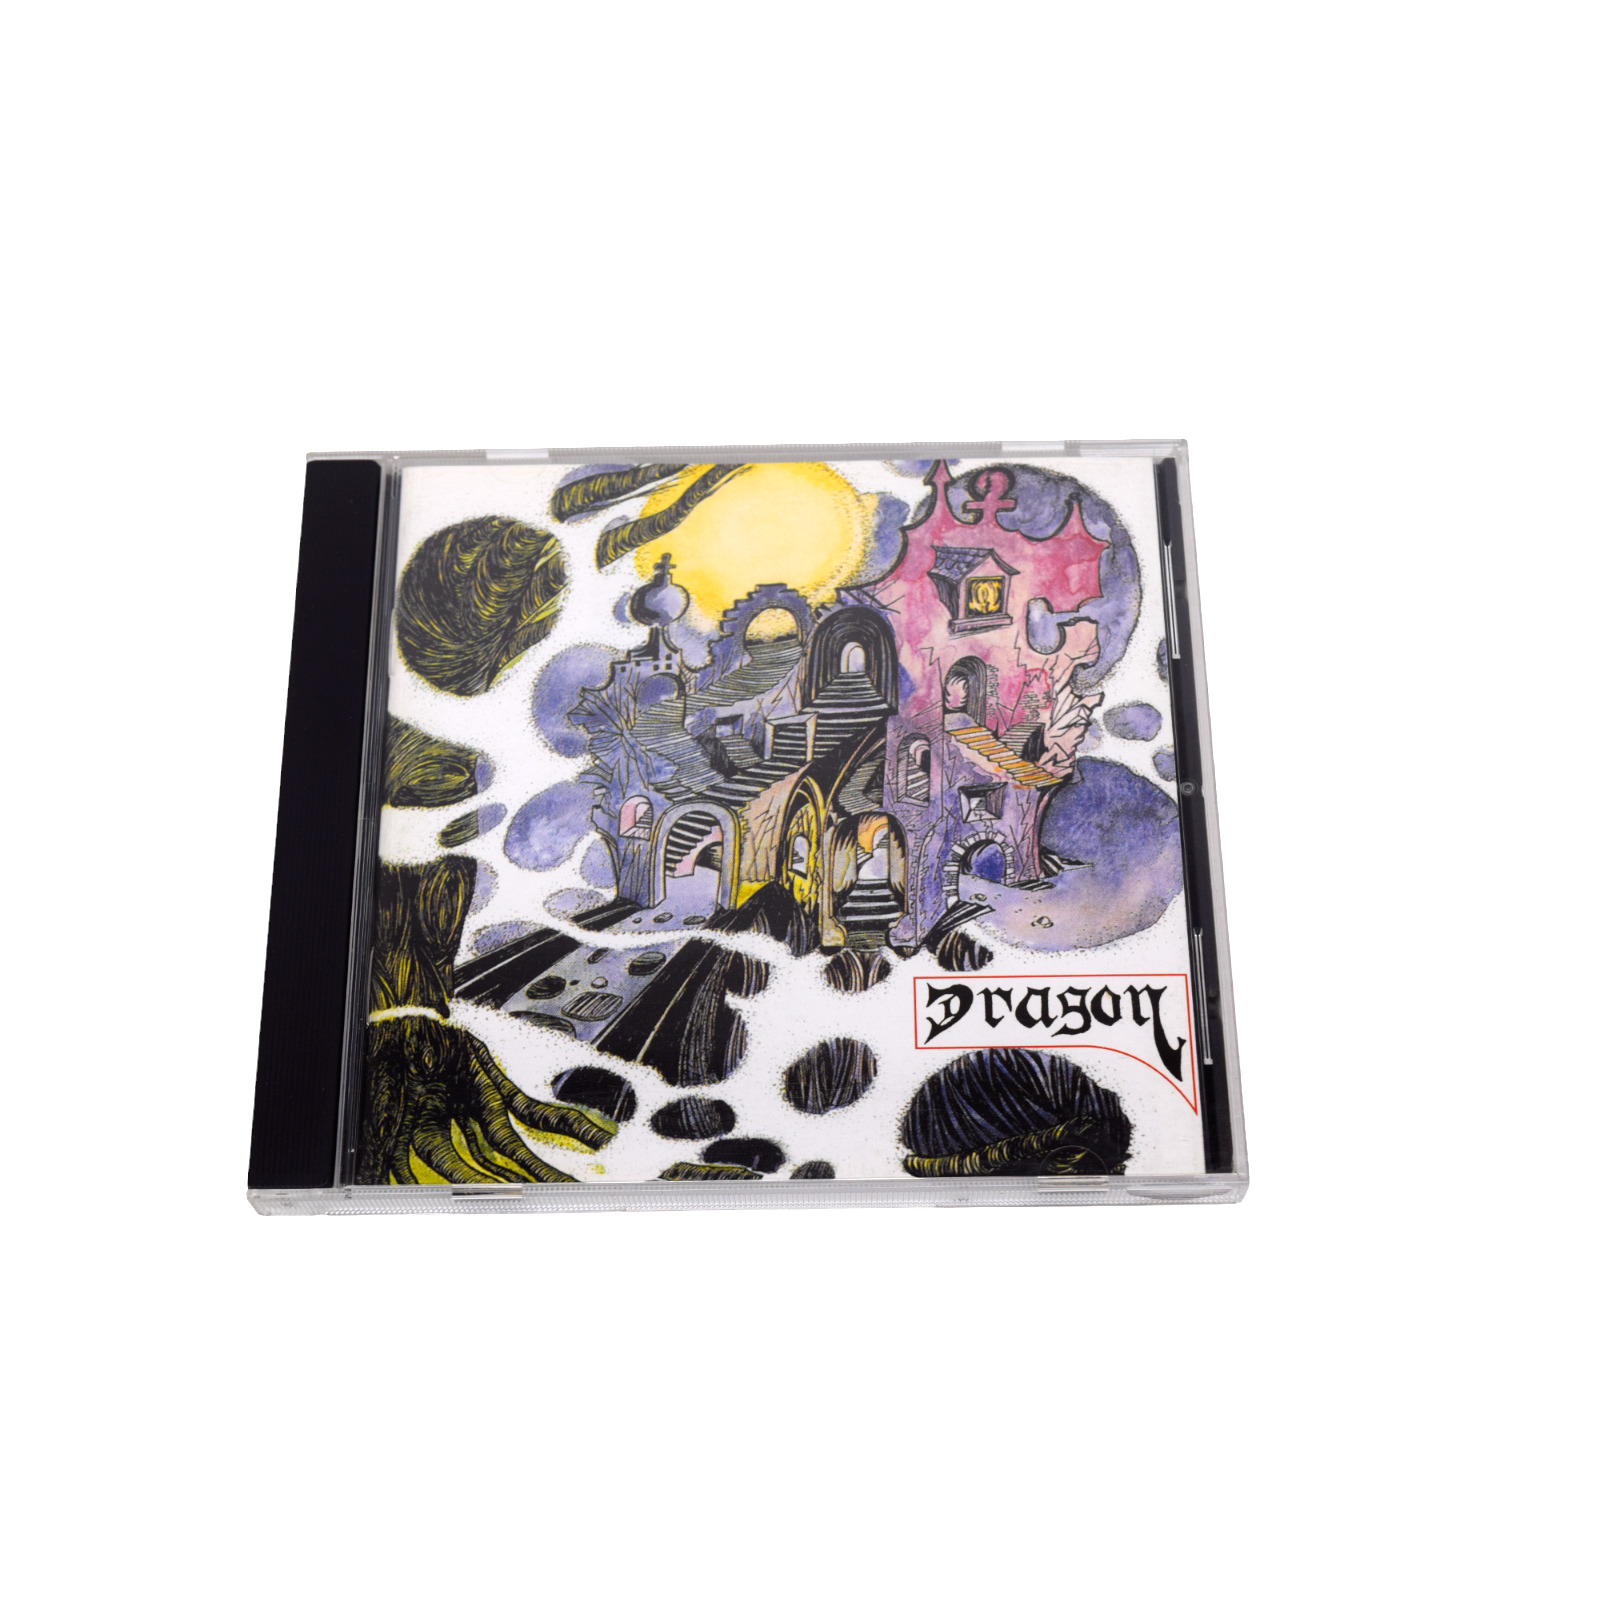 Dragon by Dragon (CD, 2005, Mals)